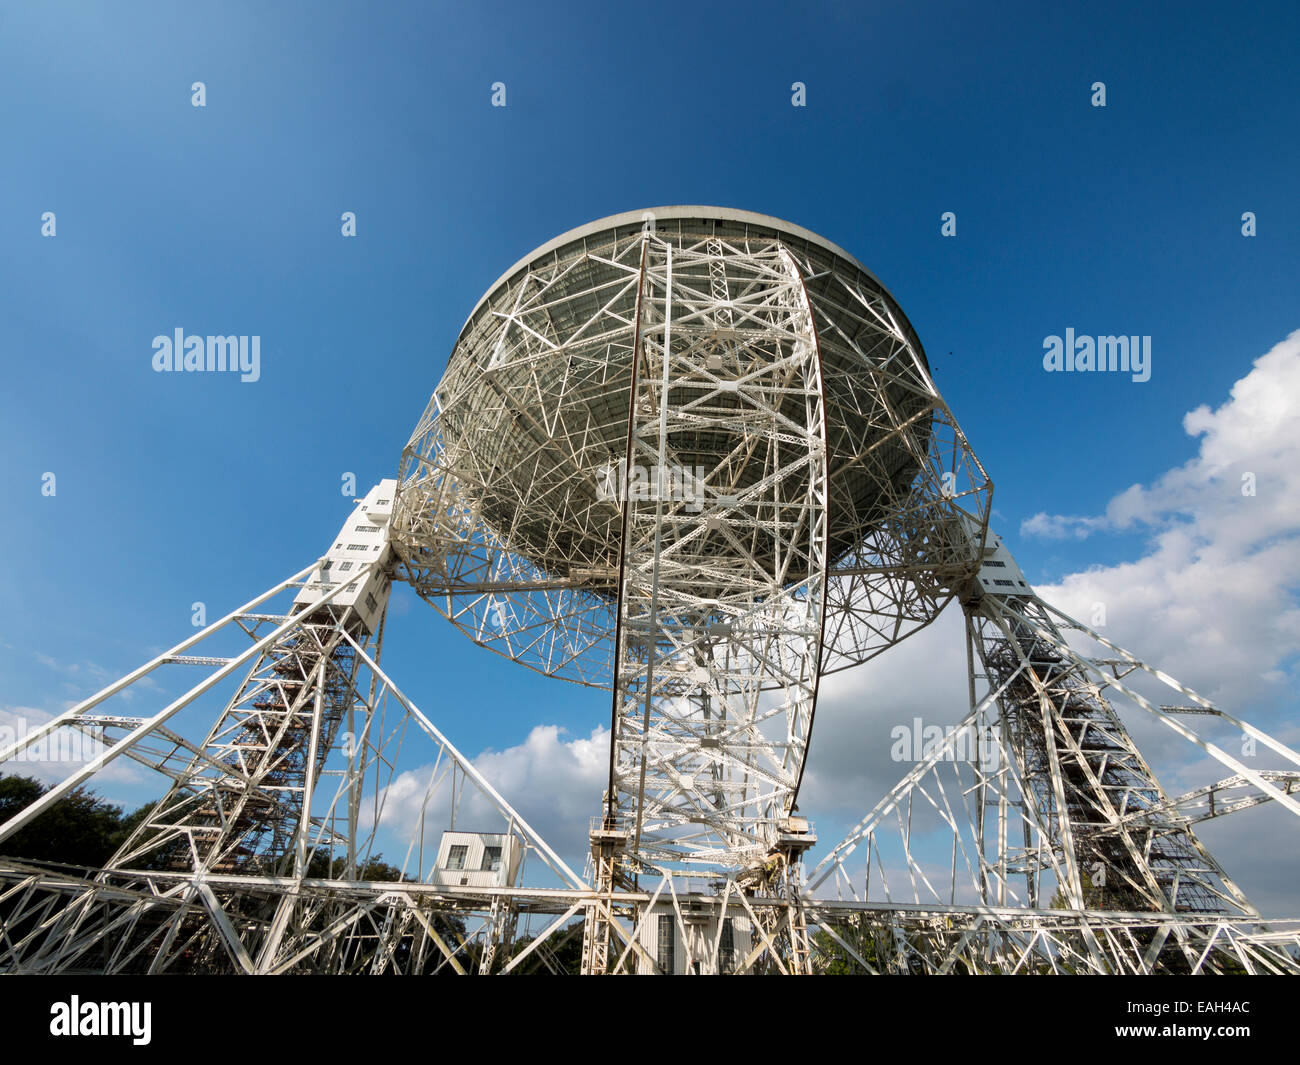 Lovell Telescope at Jodrell Bank Observatory,Cheshire, UK Stock Photo